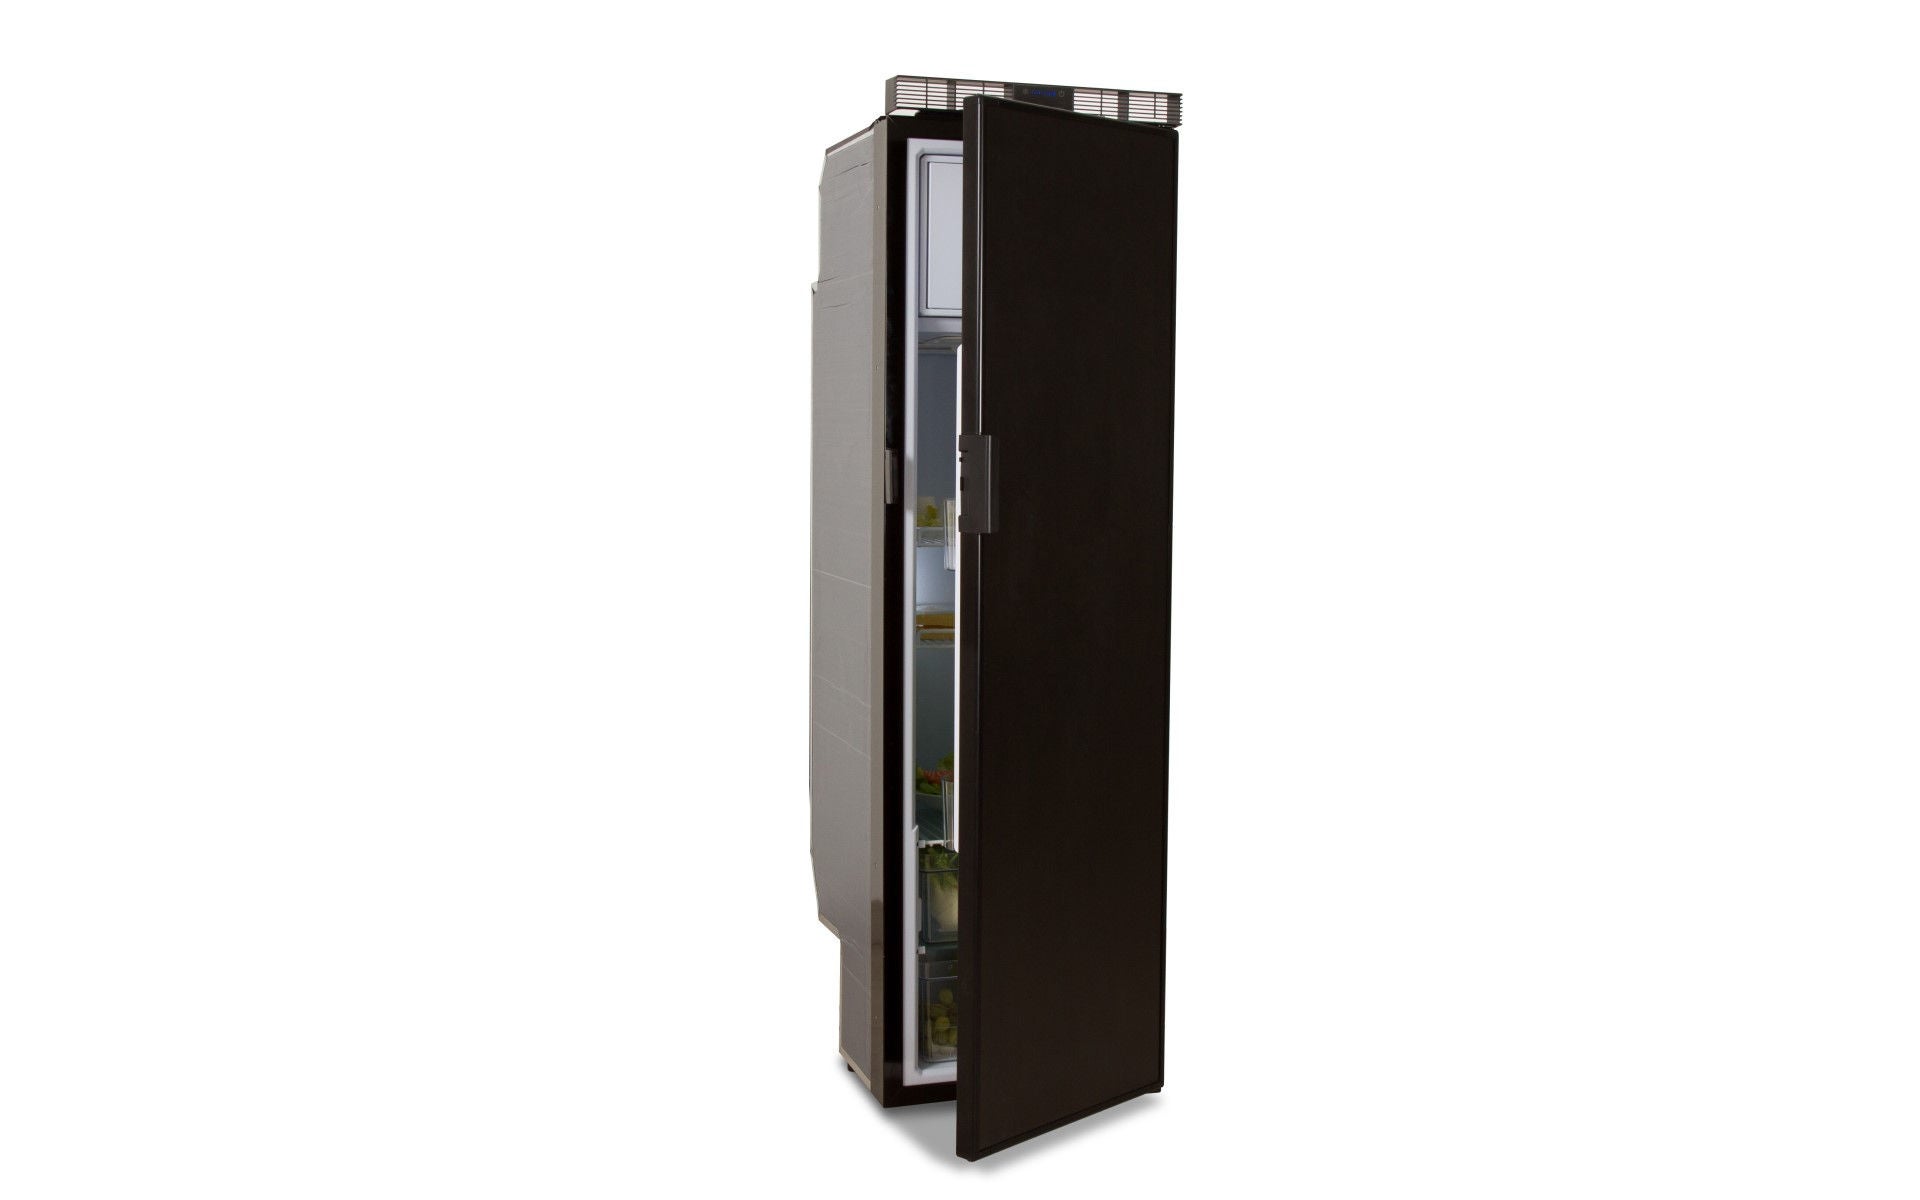 Product picture of Freeline Slim 140 fridge with closed door